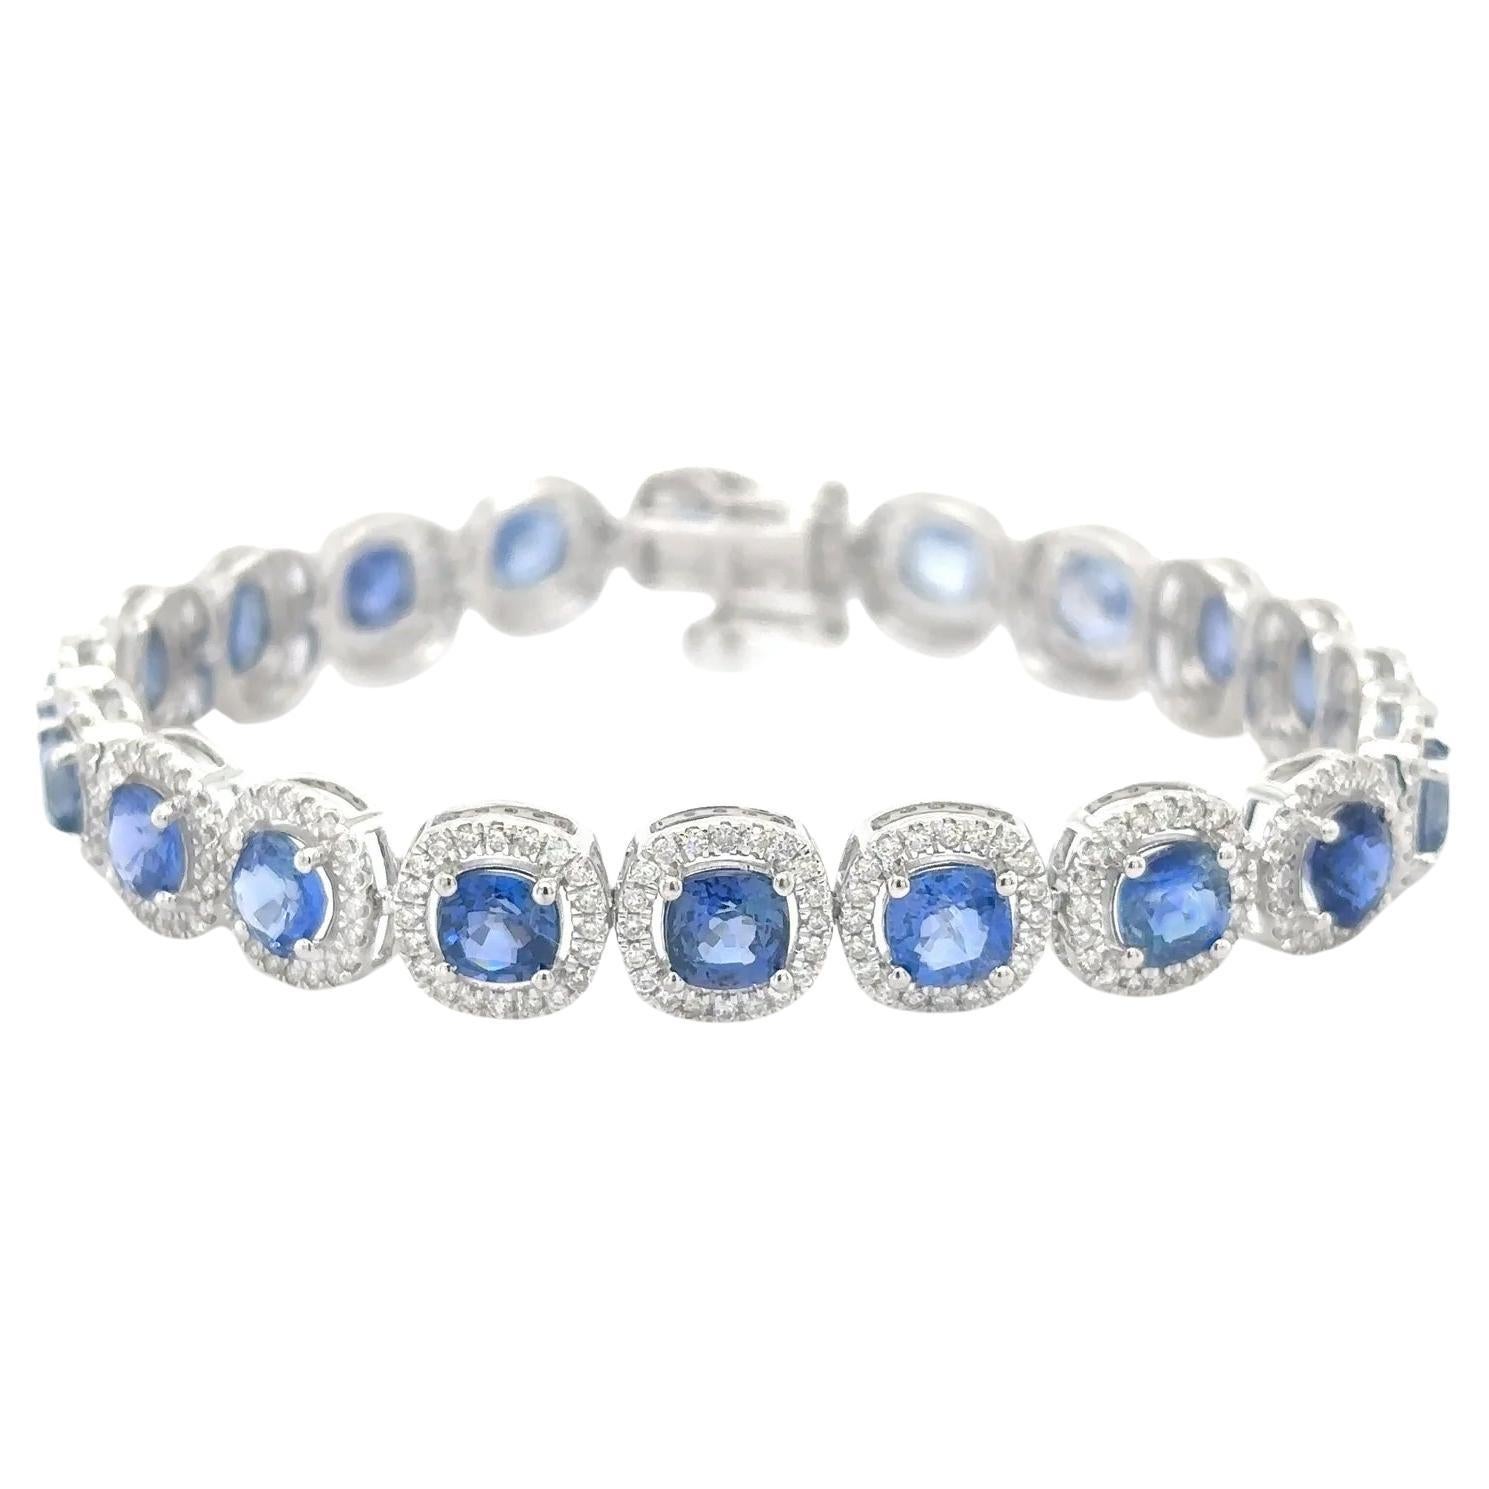 Sapphire Bracelet With Diamonds 17.36 Carats 14K White Gold